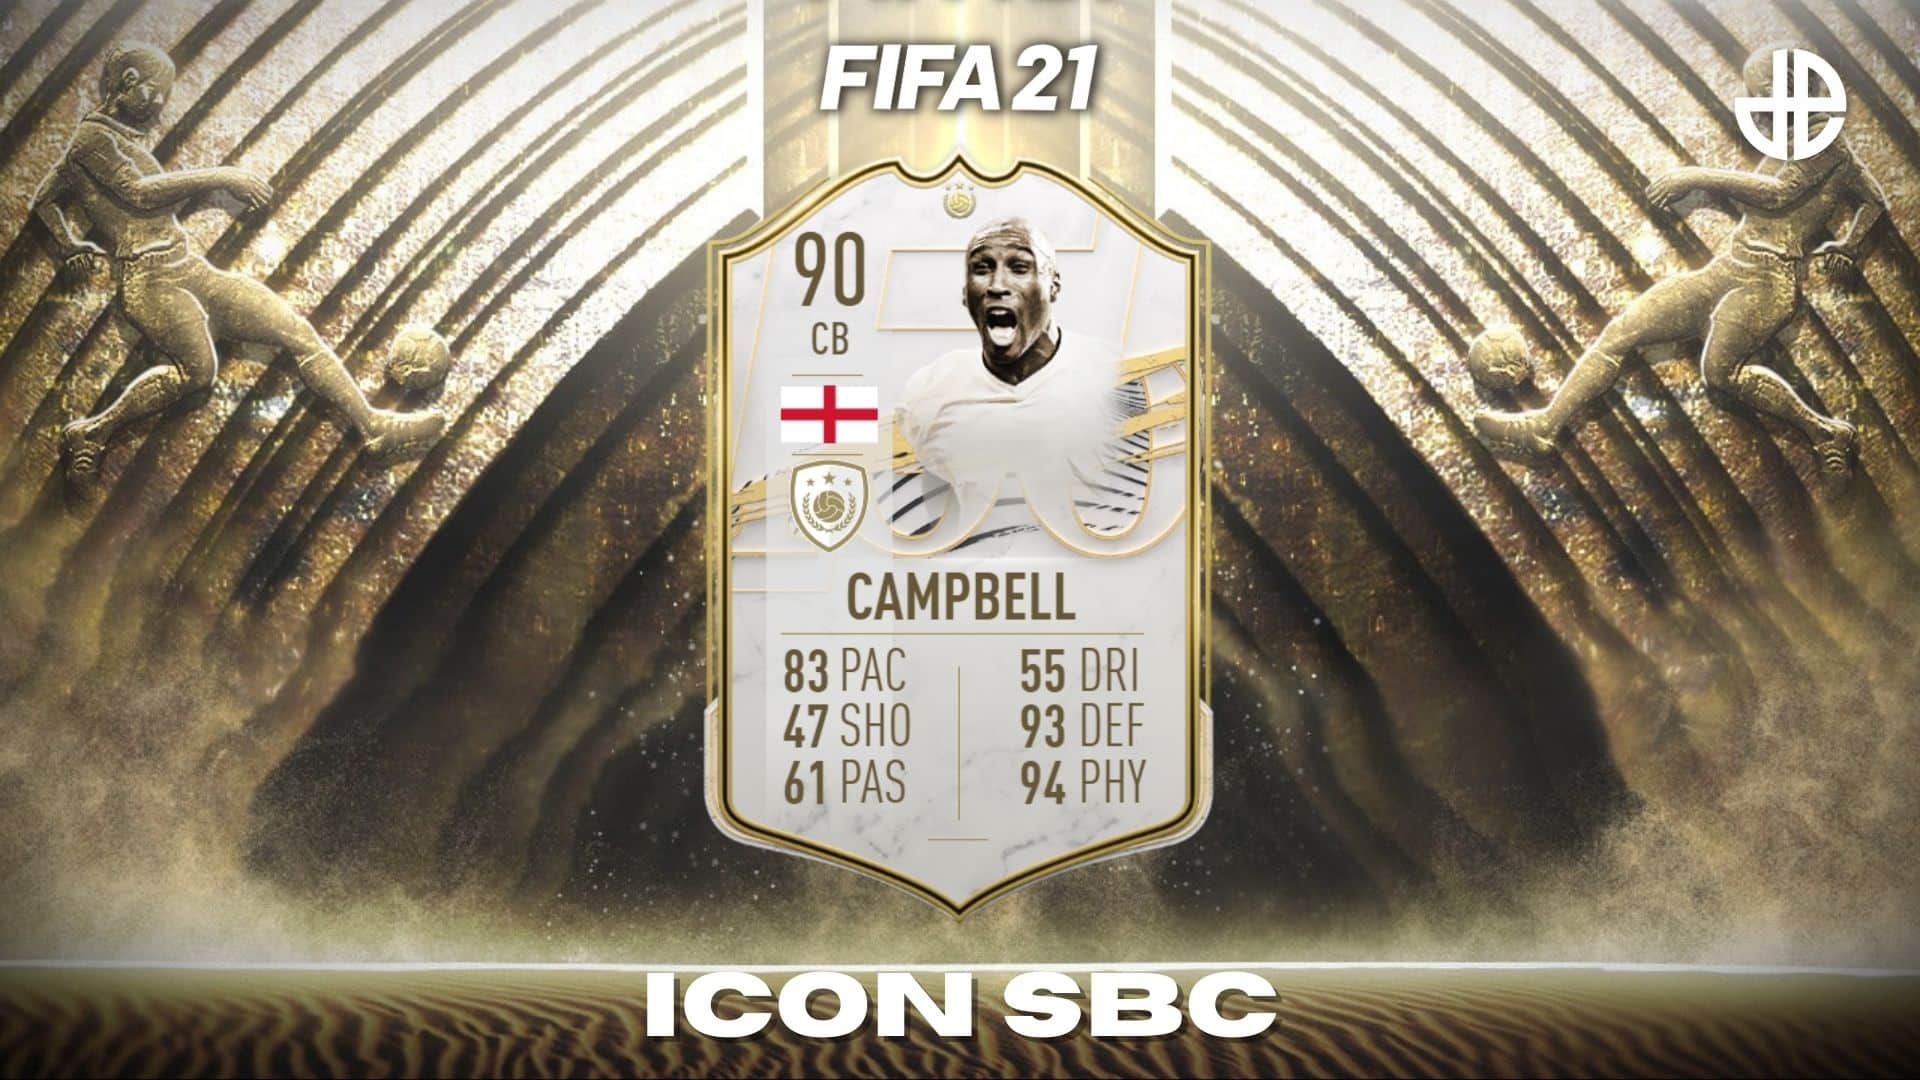 Sol Campbell ICON SBC FIFA 21